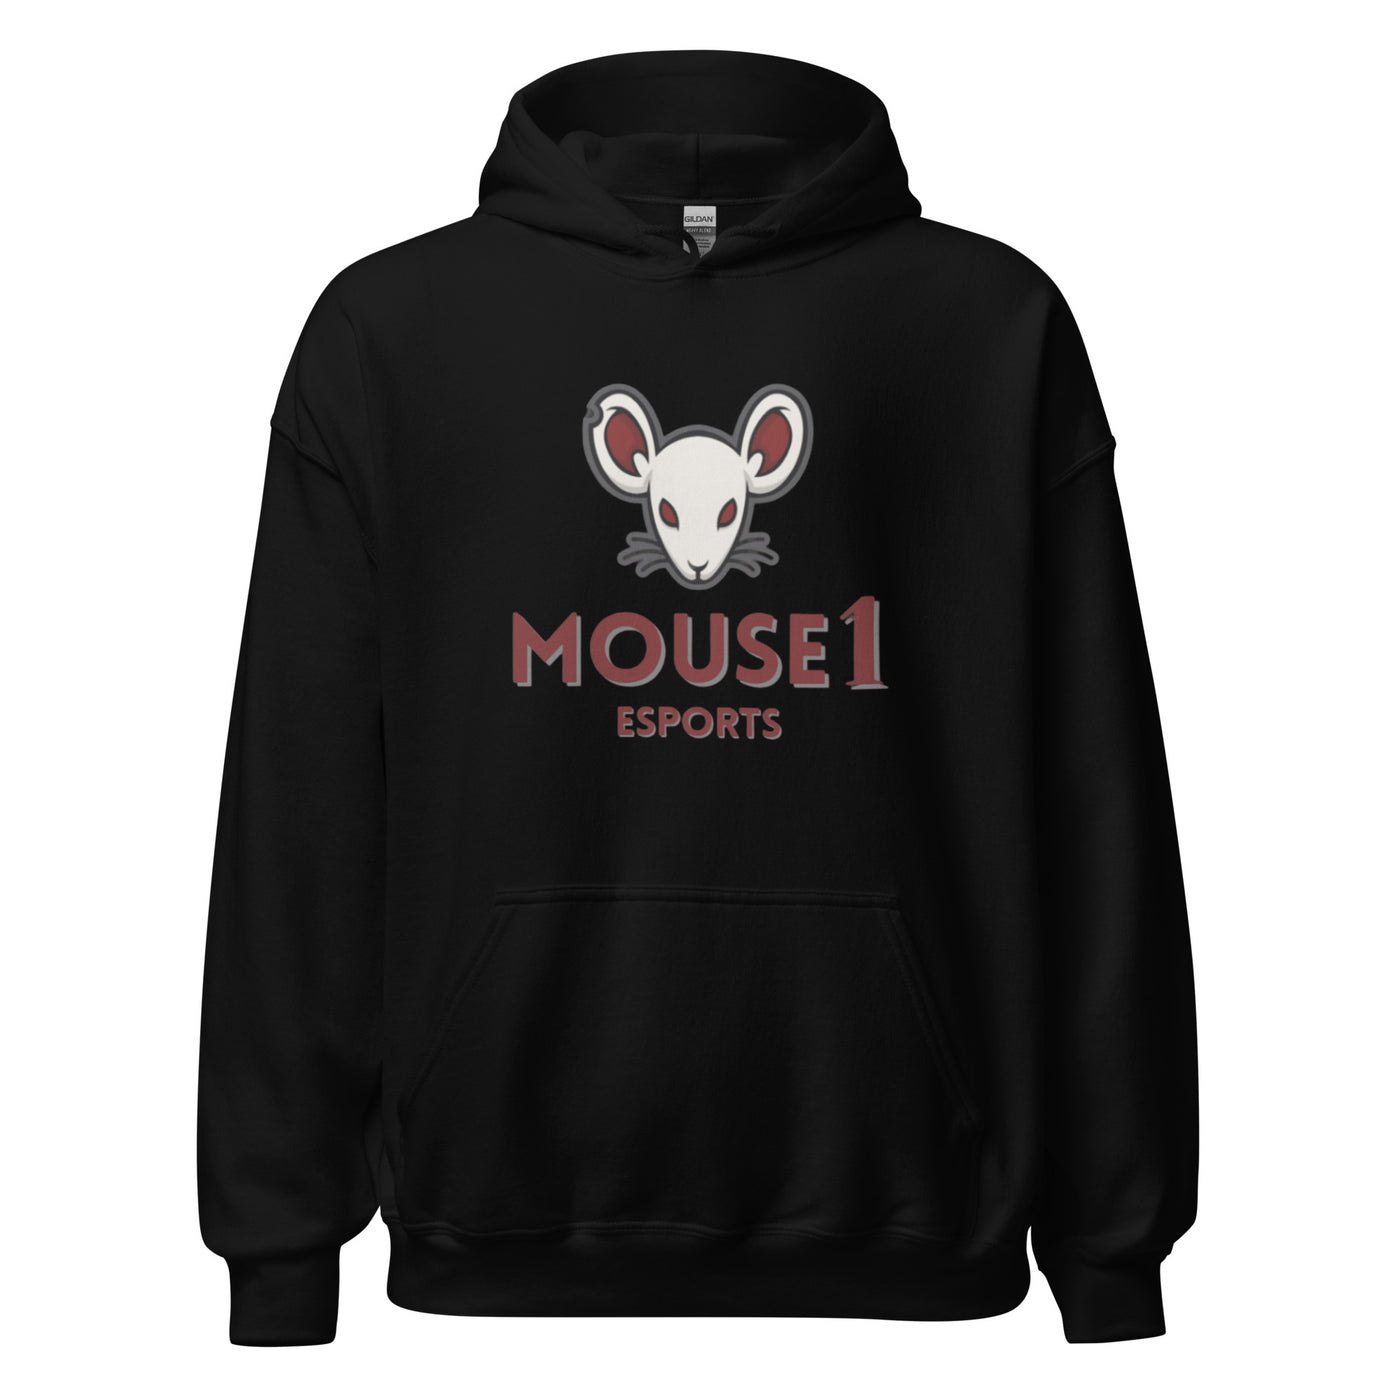 Mouse1 Esports Unisex Hoodie